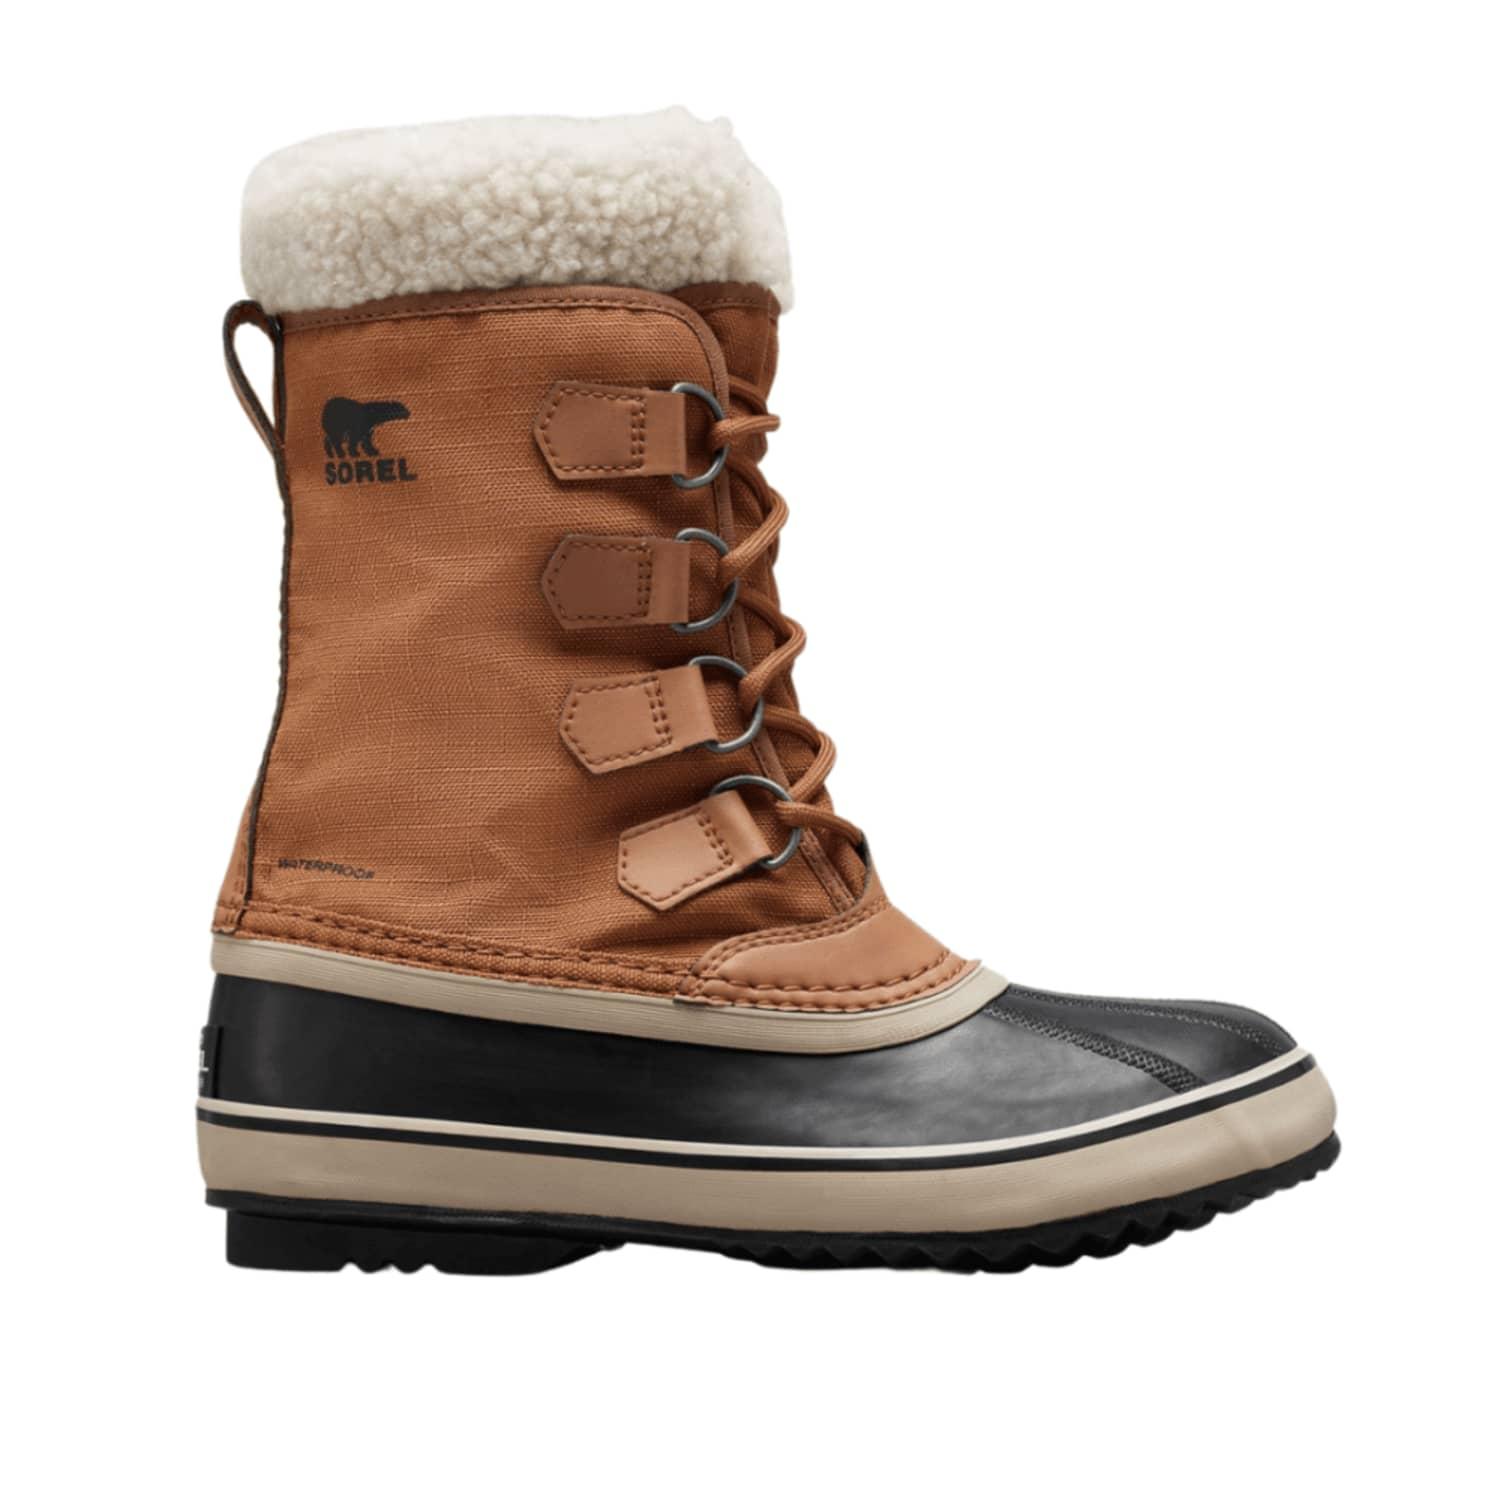 Sorel Winter Carnival Boots Camel Brown | Lyst